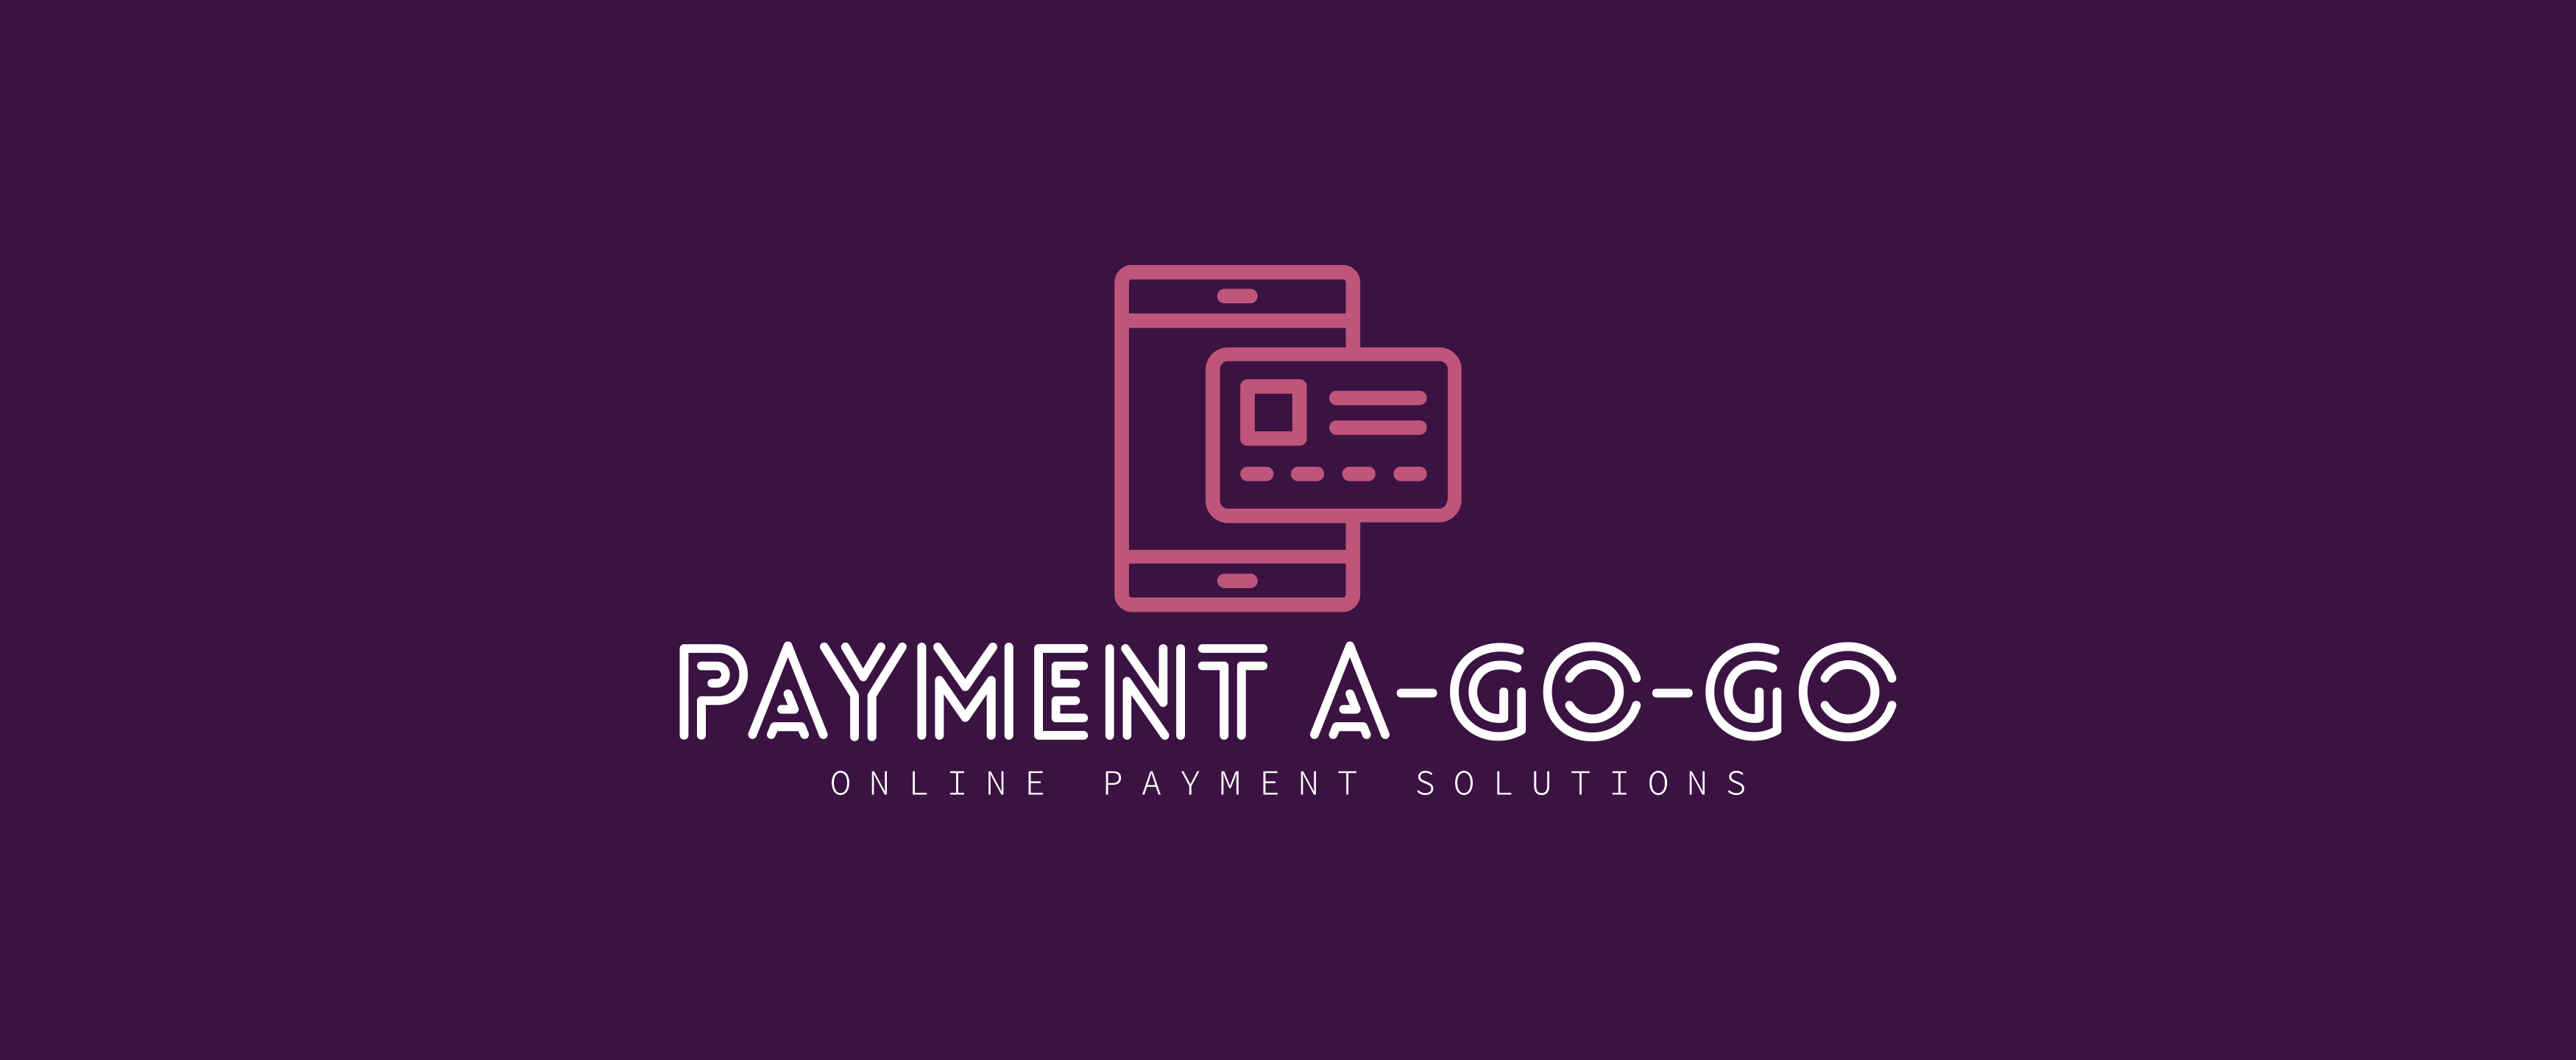 Payment A-Go-Go